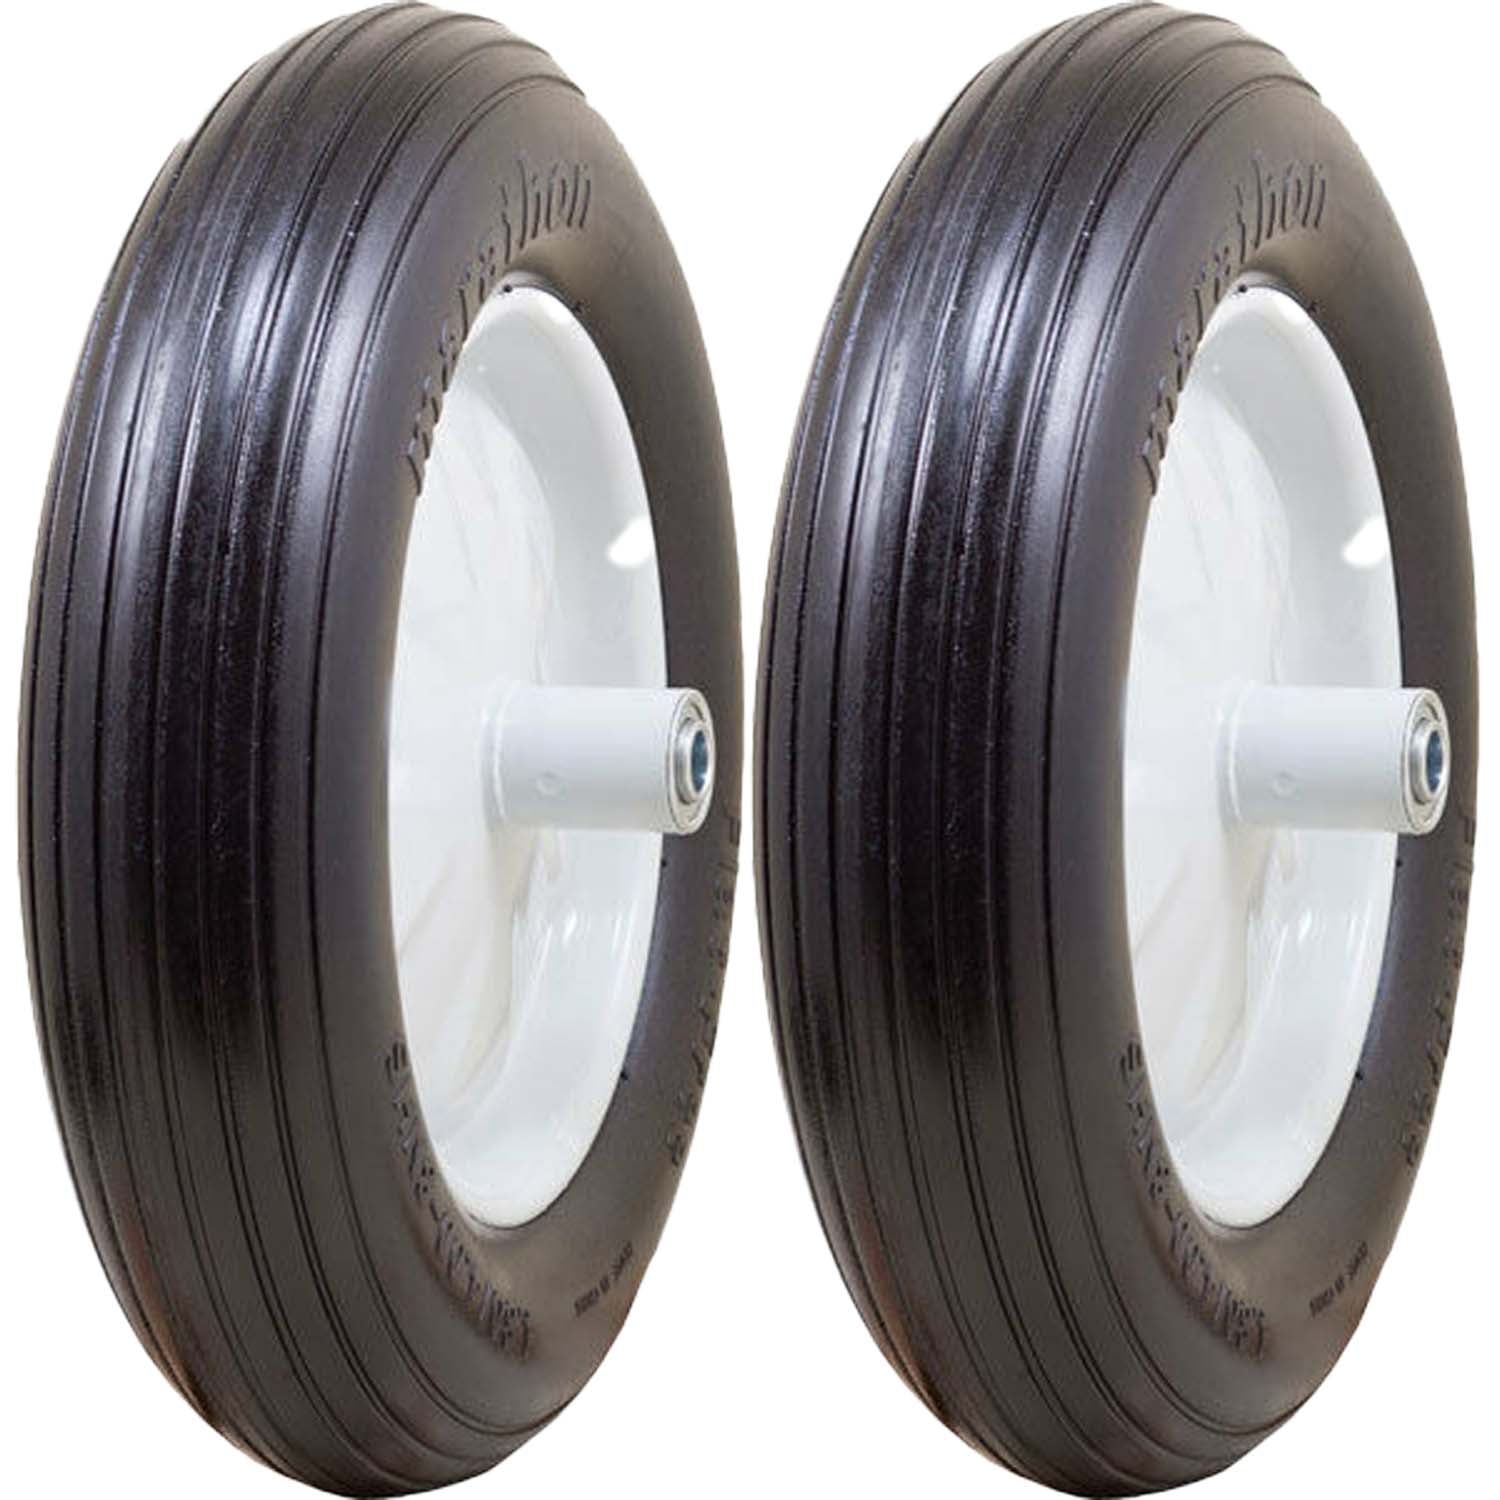 Marathon 00001 Flat Free Ribbed Utility Wheelbarrow Tire 4.80/4.00-8 Pack of 2